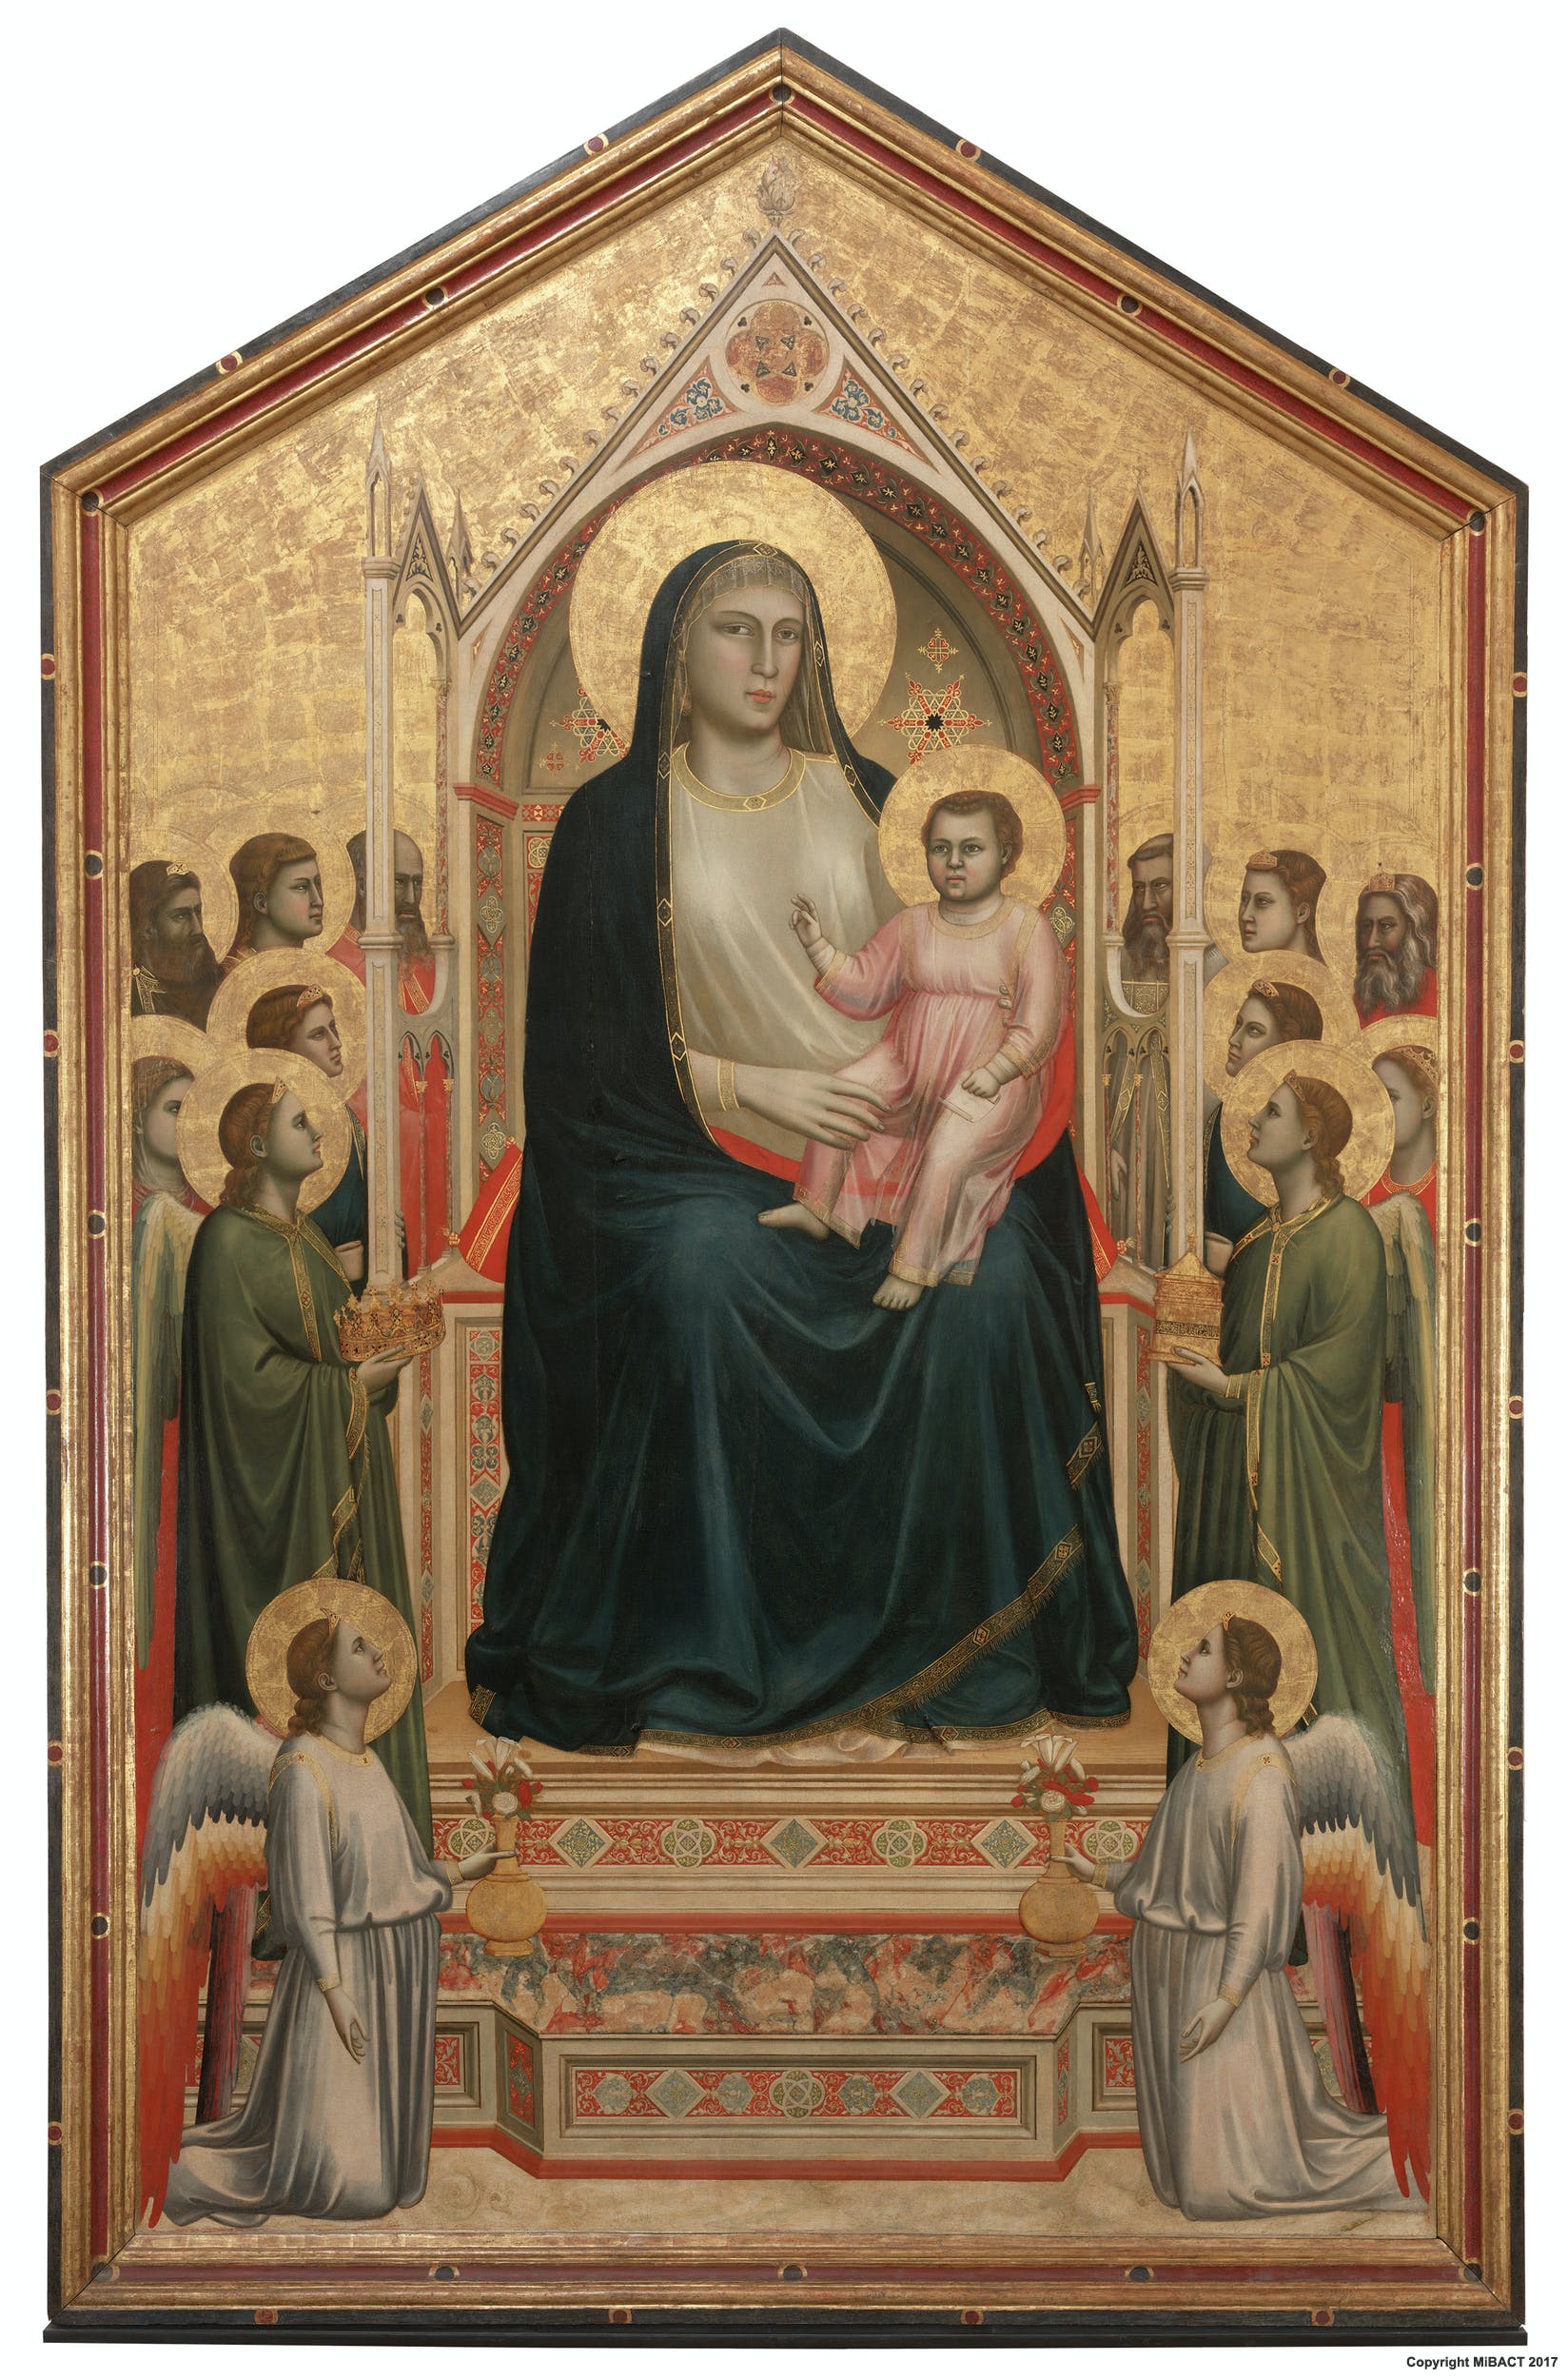 Die Ognissanti-Madonna, Giotto